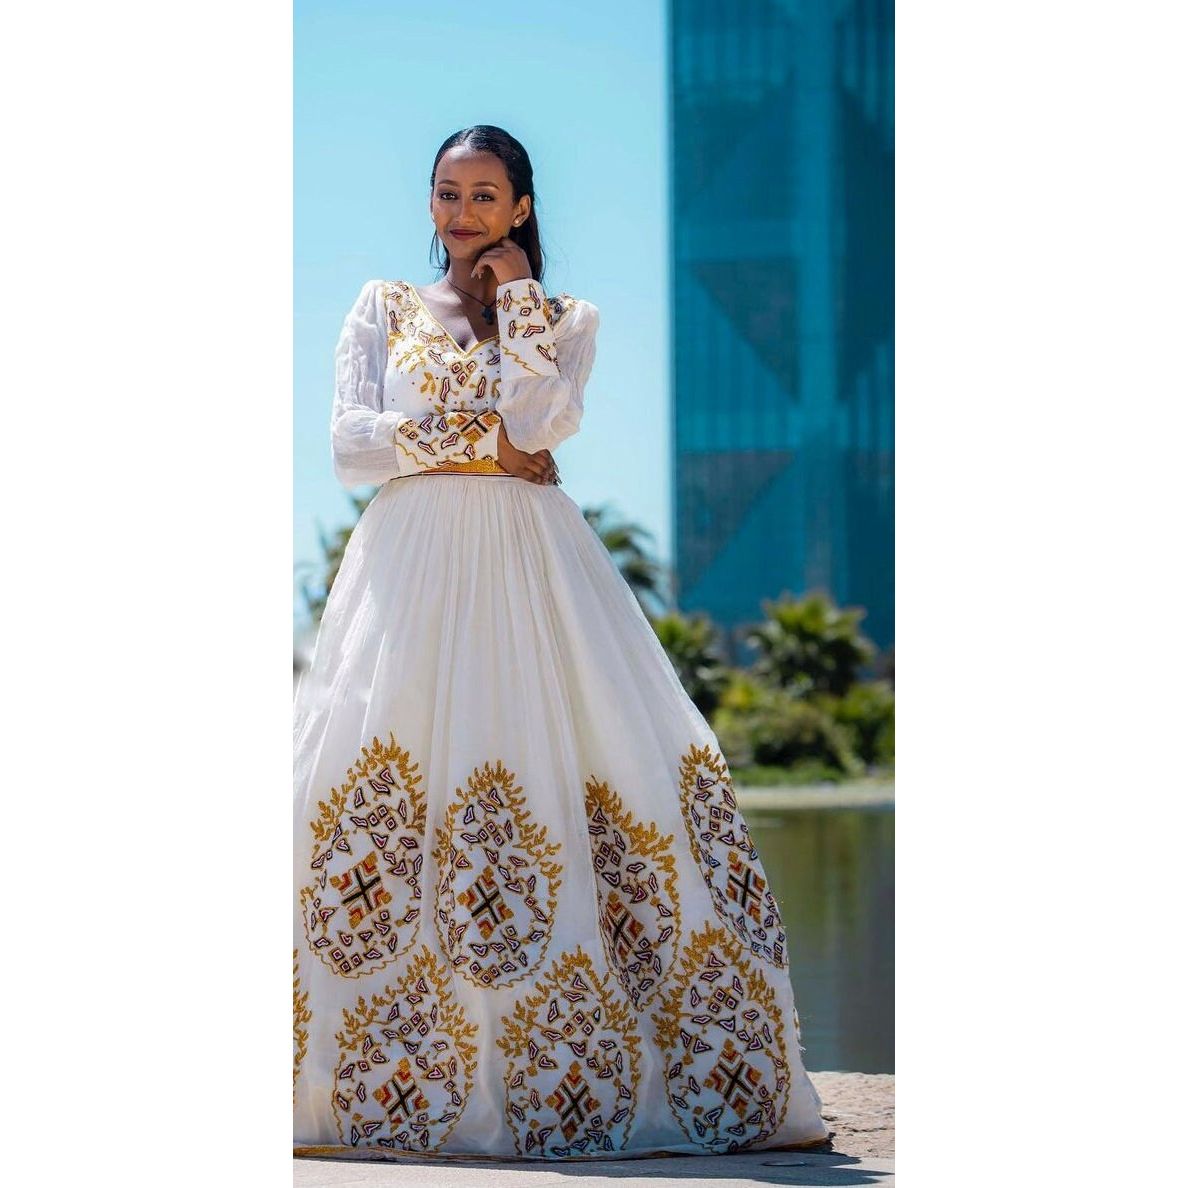 Handwoven Habesha Dress Wedding Habesha Kemis Habesha Libs Eritrean Dress ሀበሻ ቀሚስ ሀበሻ ልብስ